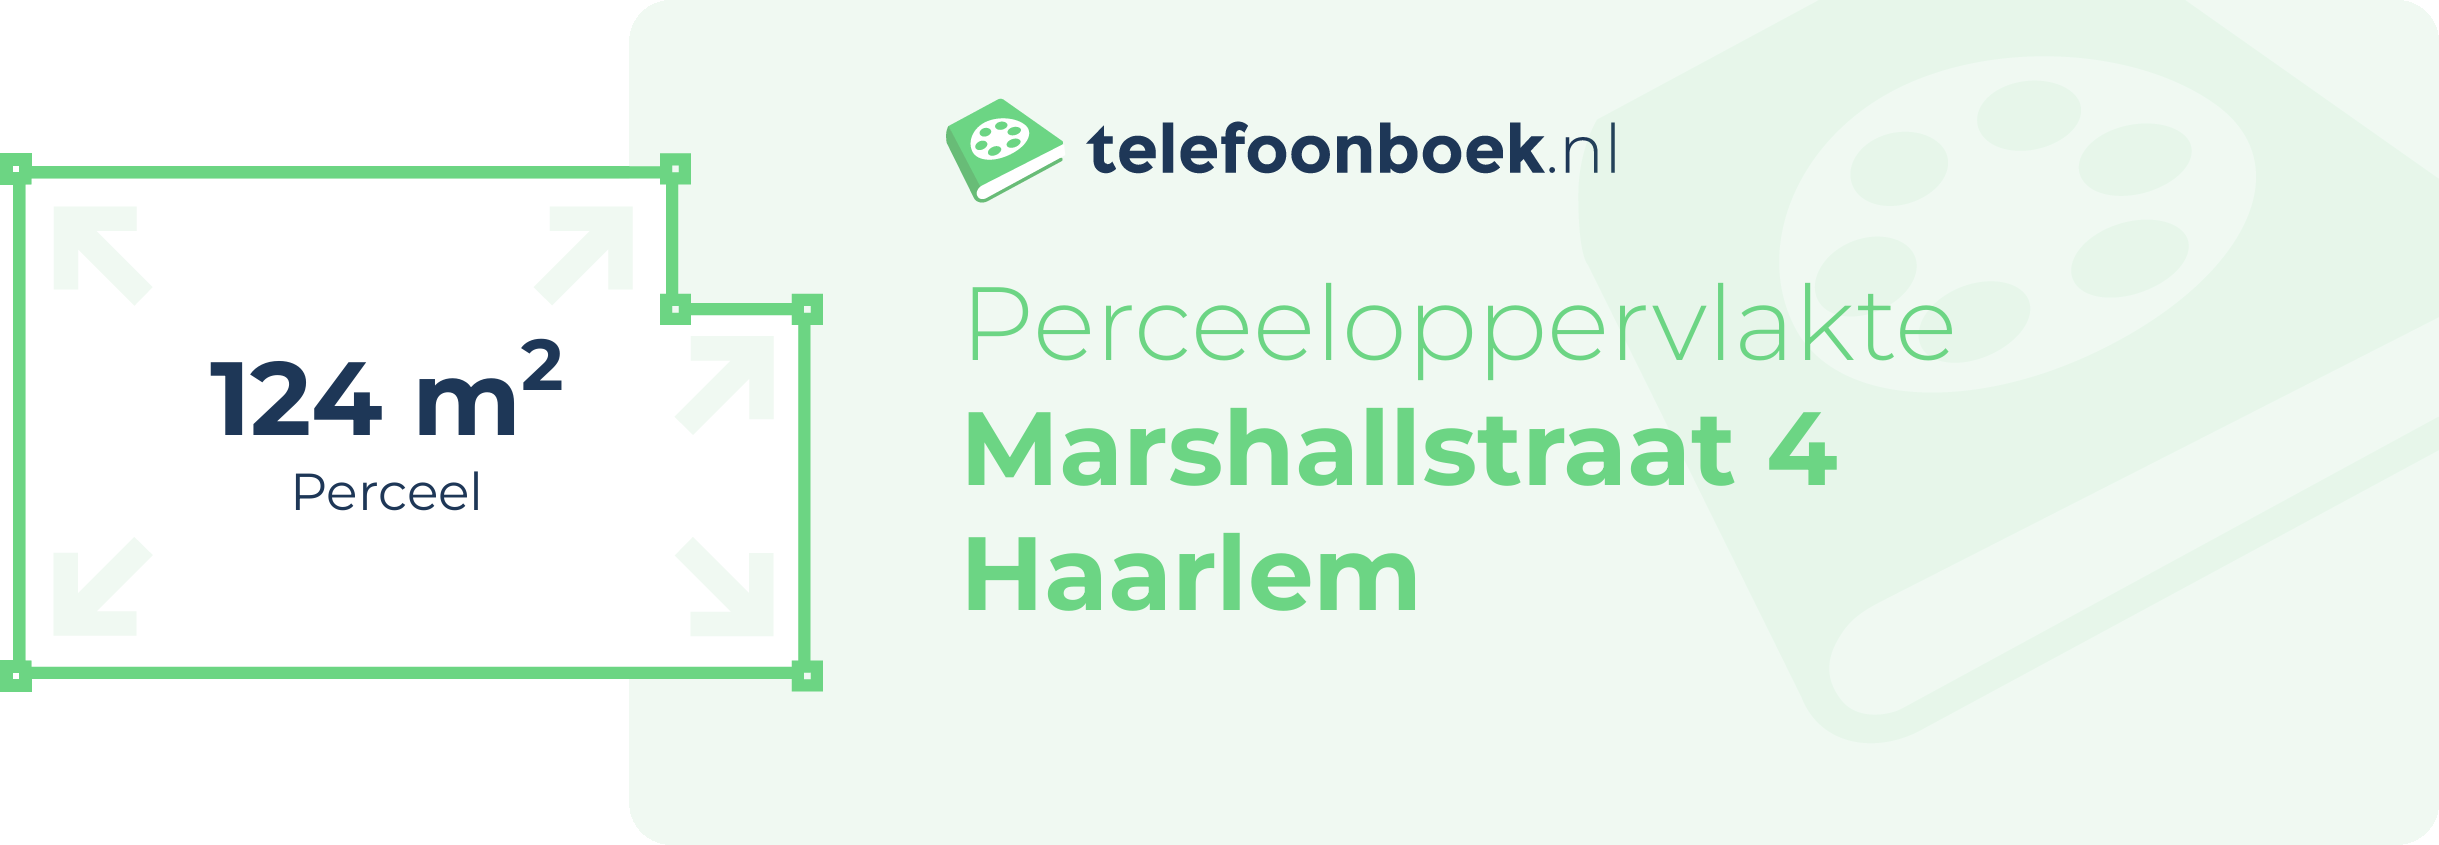 Perceeloppervlakte Marshallstraat 4 Haarlem